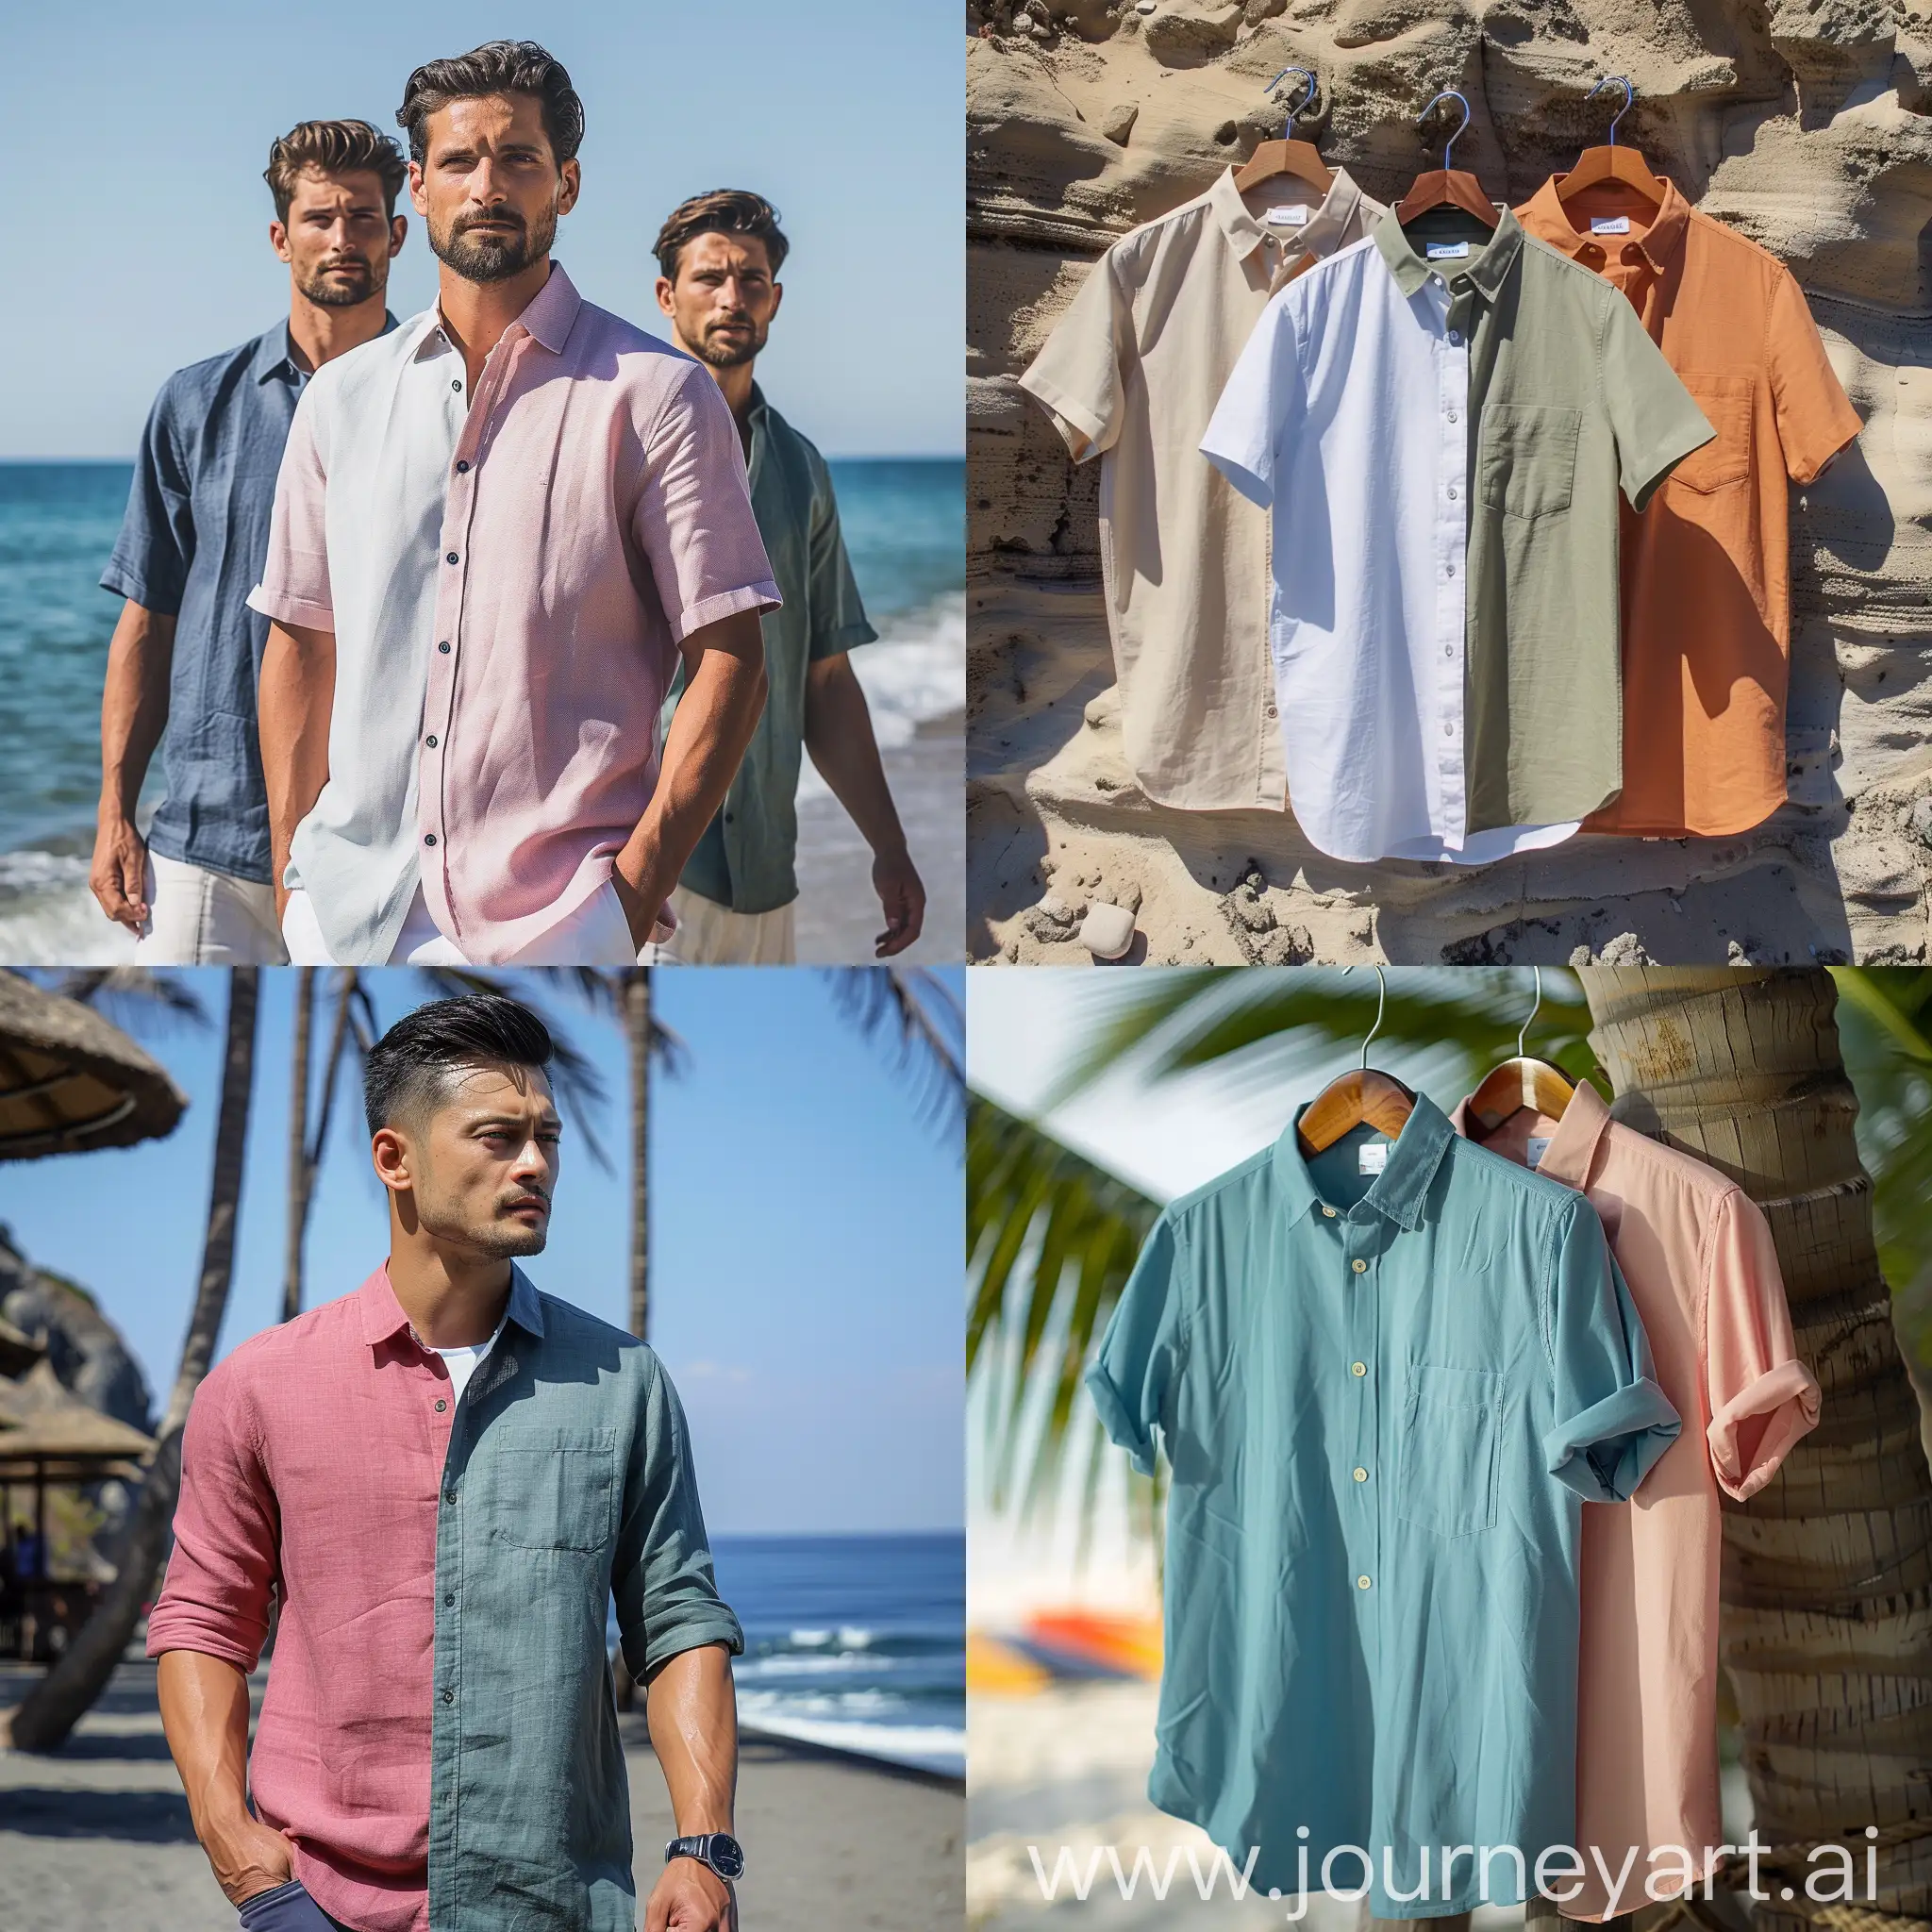 shirt company trip, 3 colors, beach, Mitek